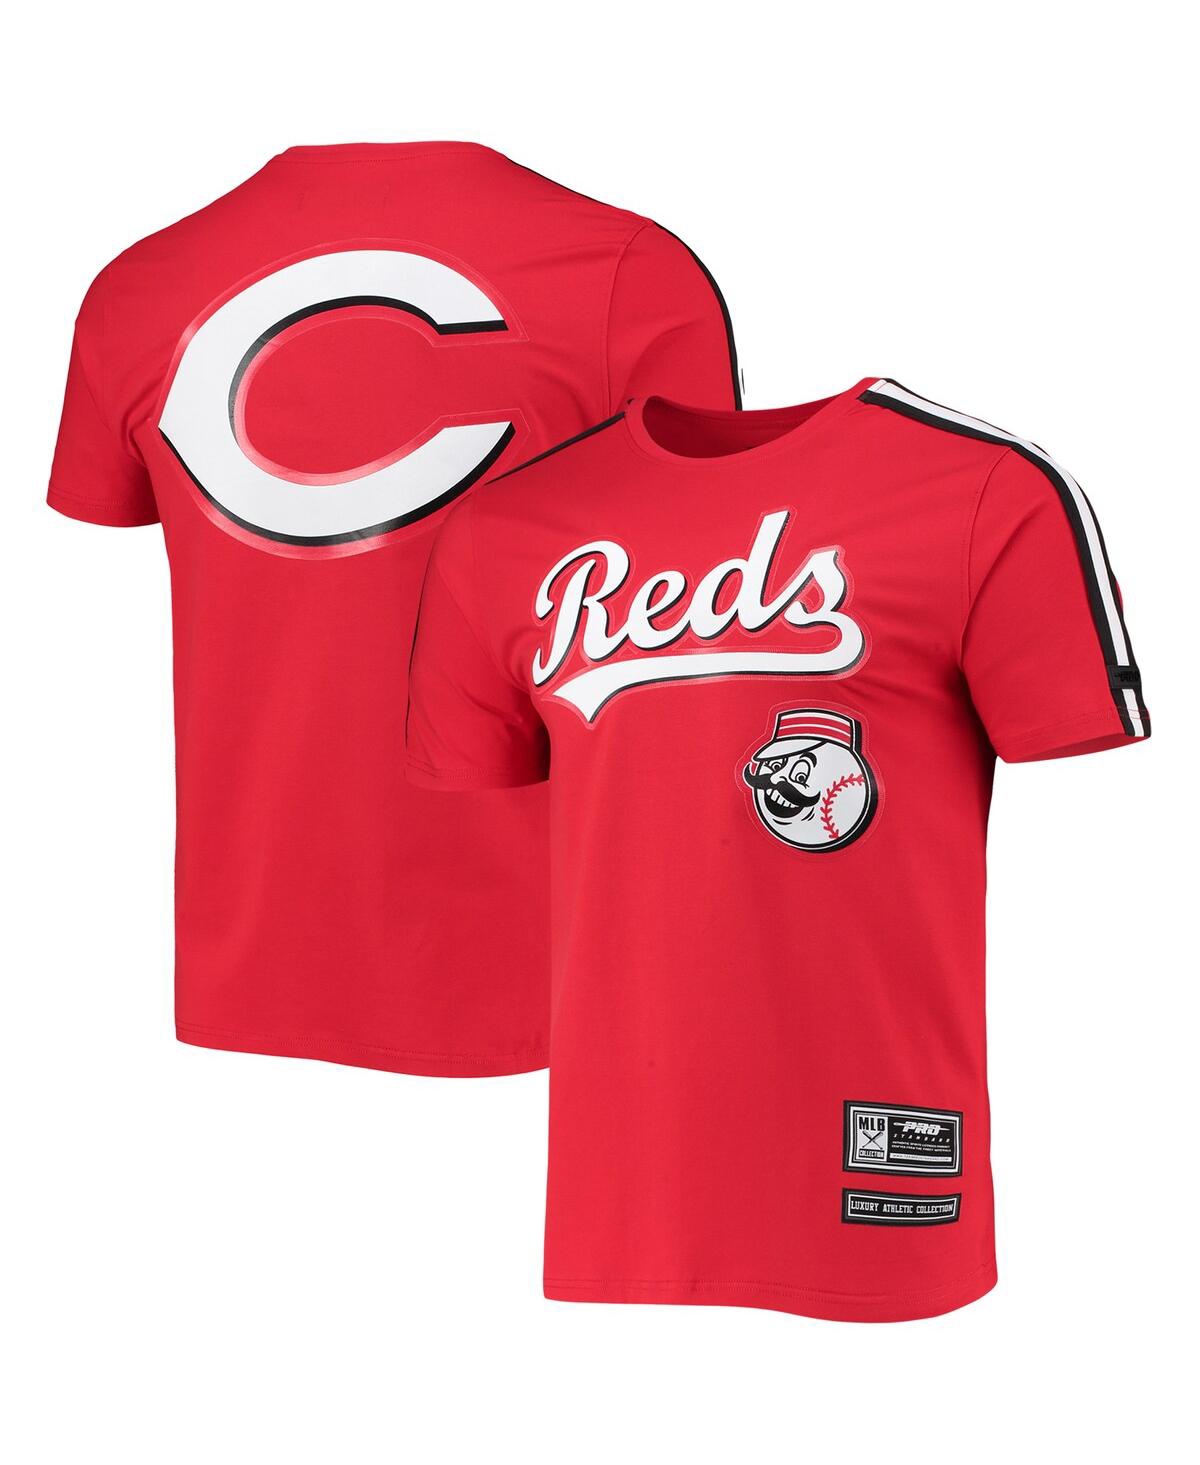 Men's Pro Standard Red Cincinnati Reds Taping T-shirt - Red